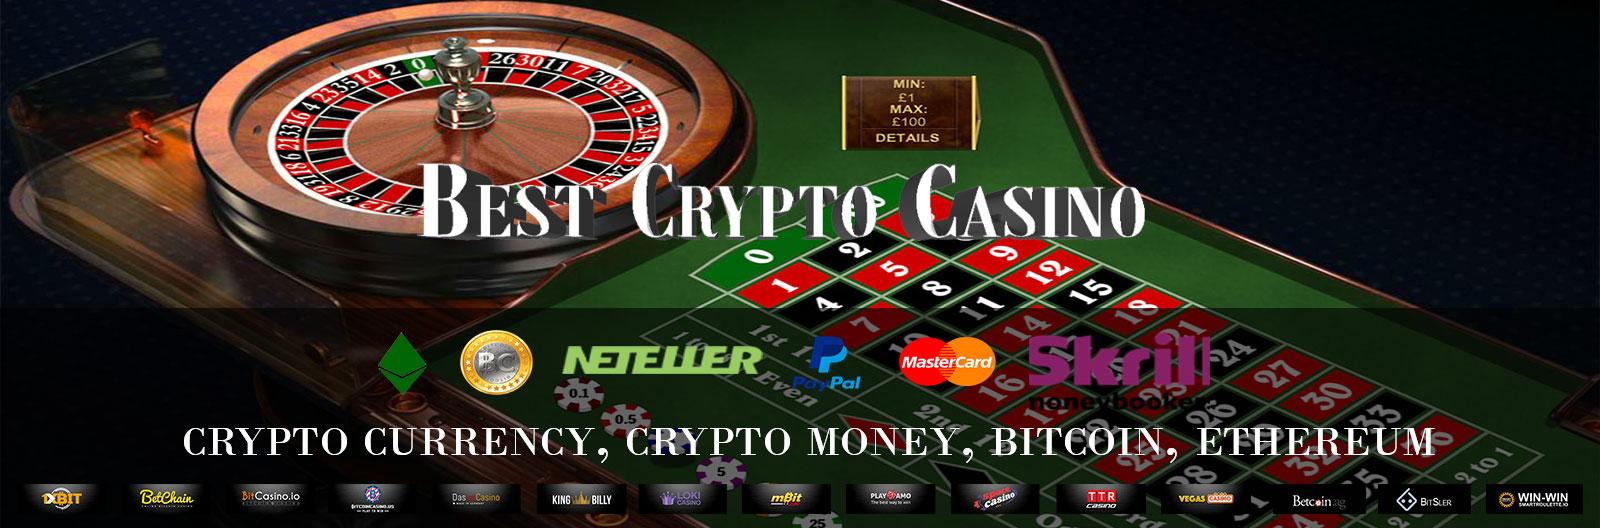 Bitcoin casino us bonus code signup